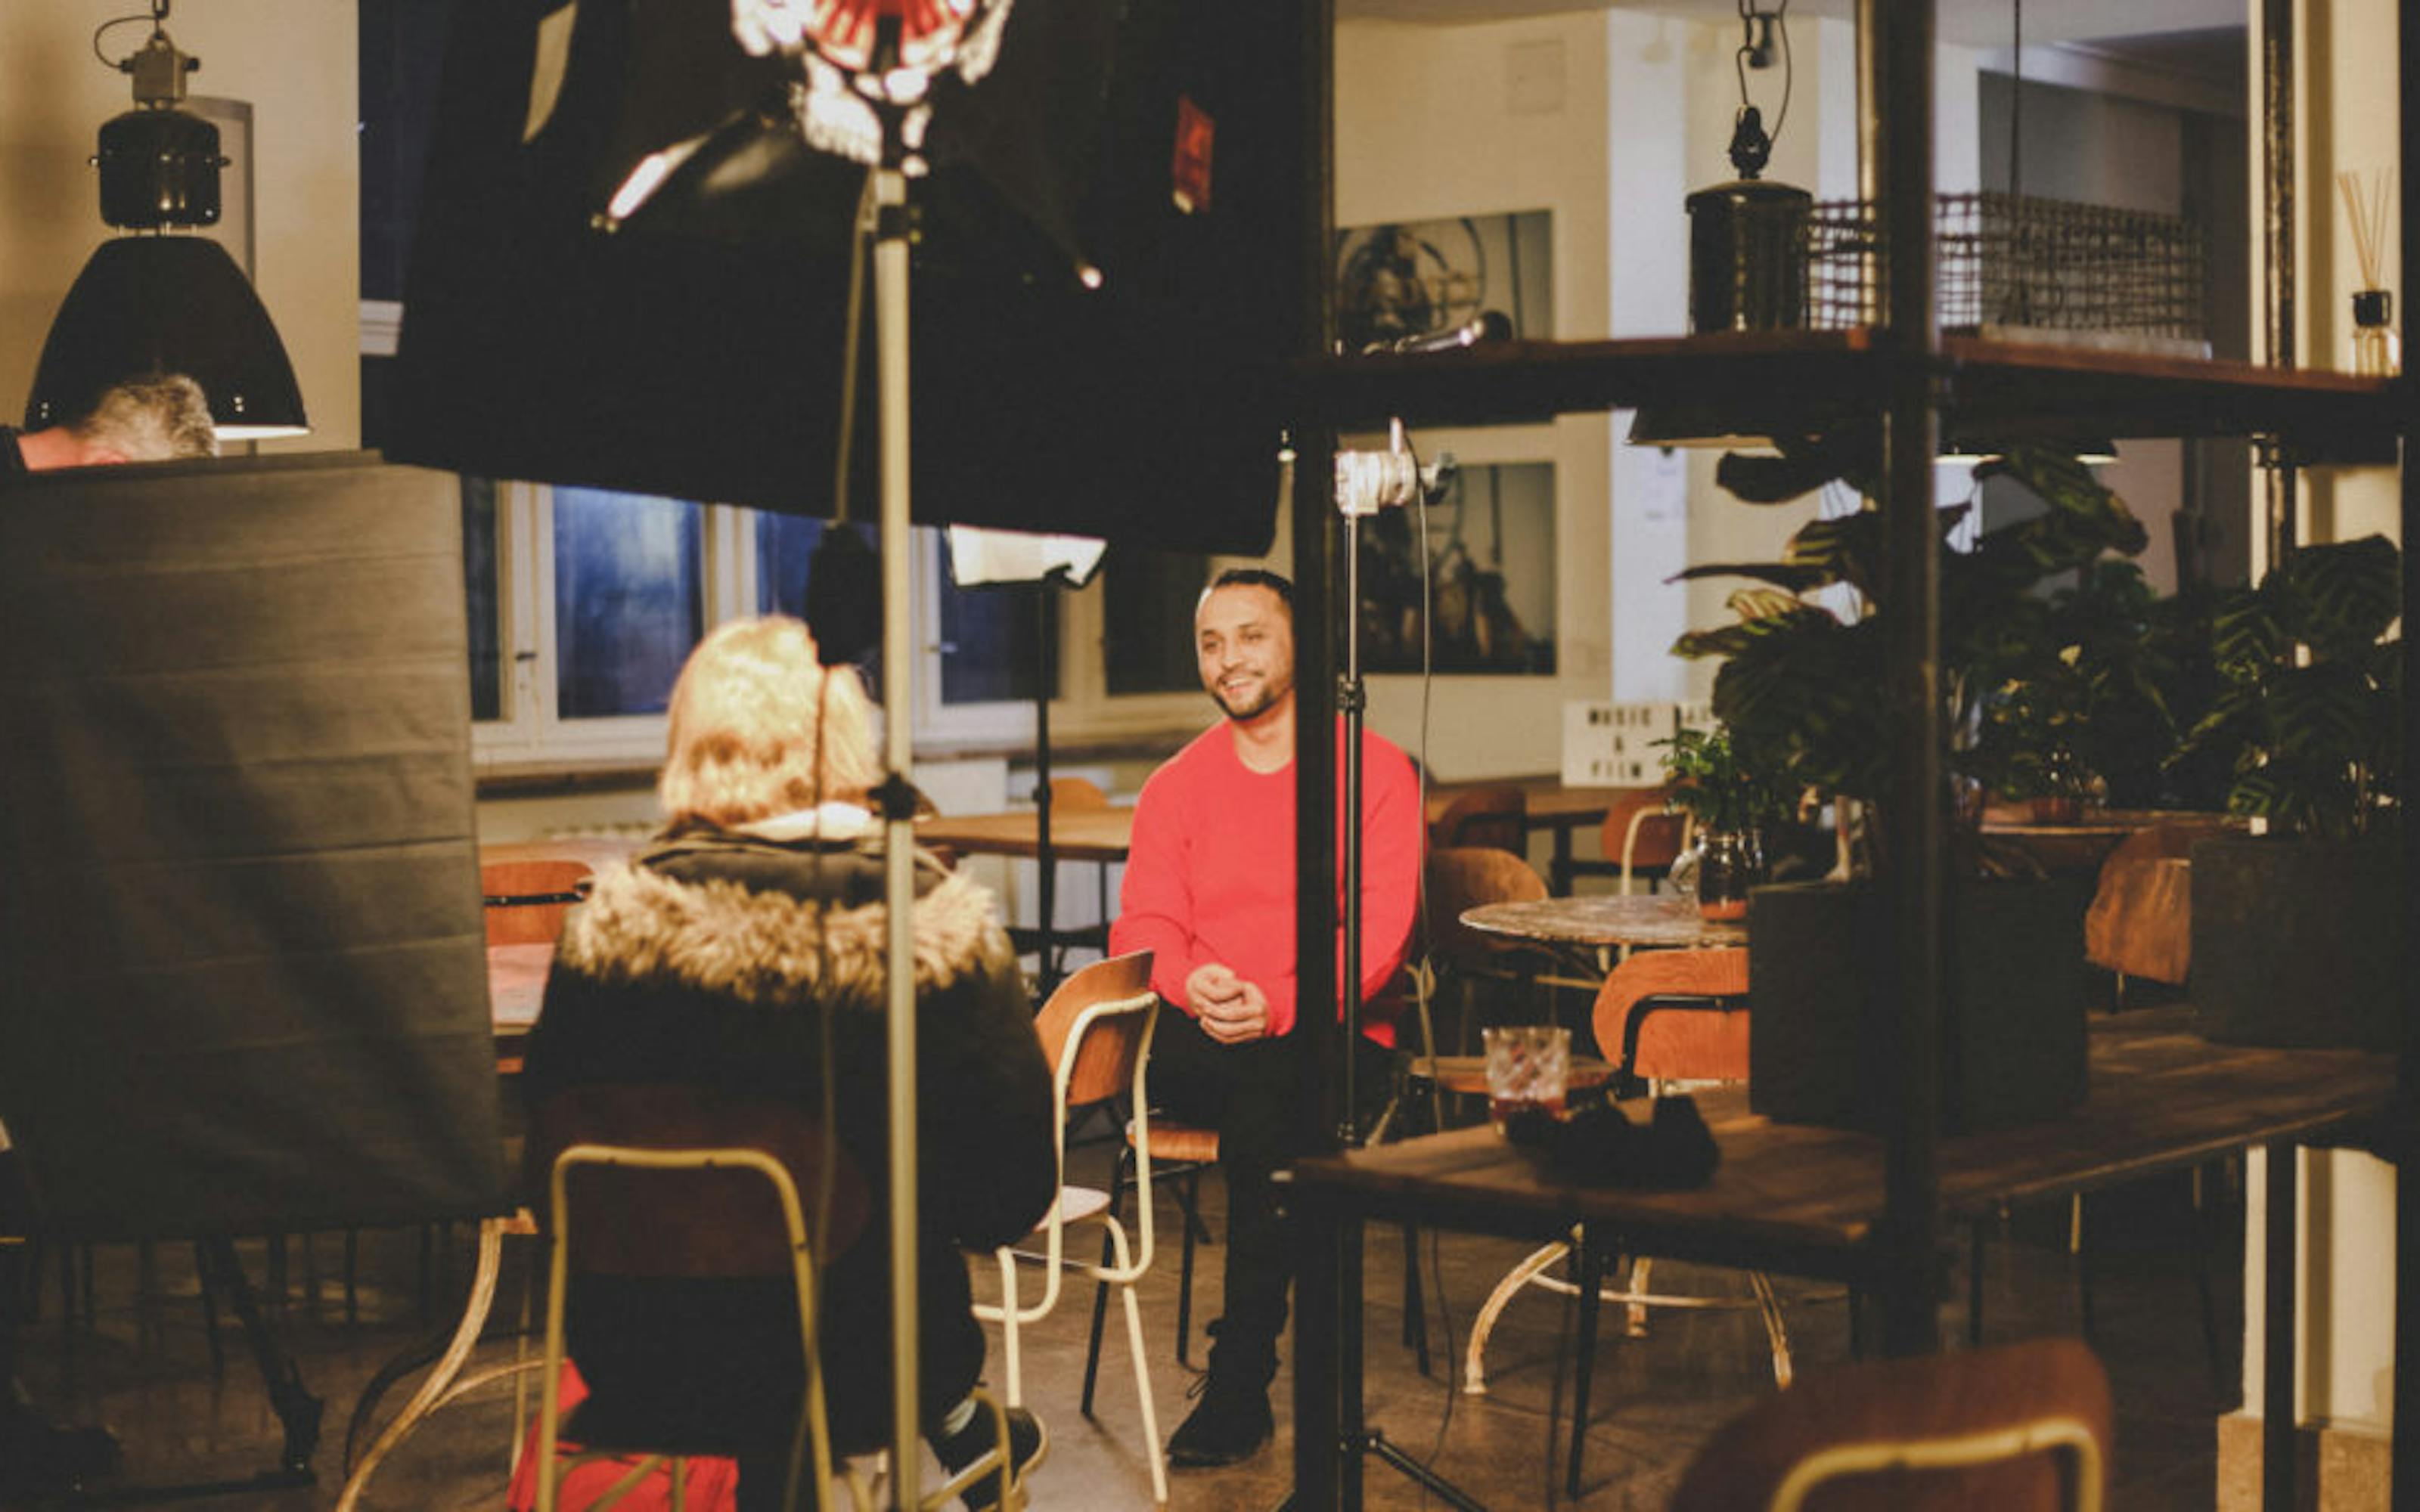 Deutsche Welle interview Catalyst Berlin Film Production student Masih Tajzai about his journey as a refugee filmmaker